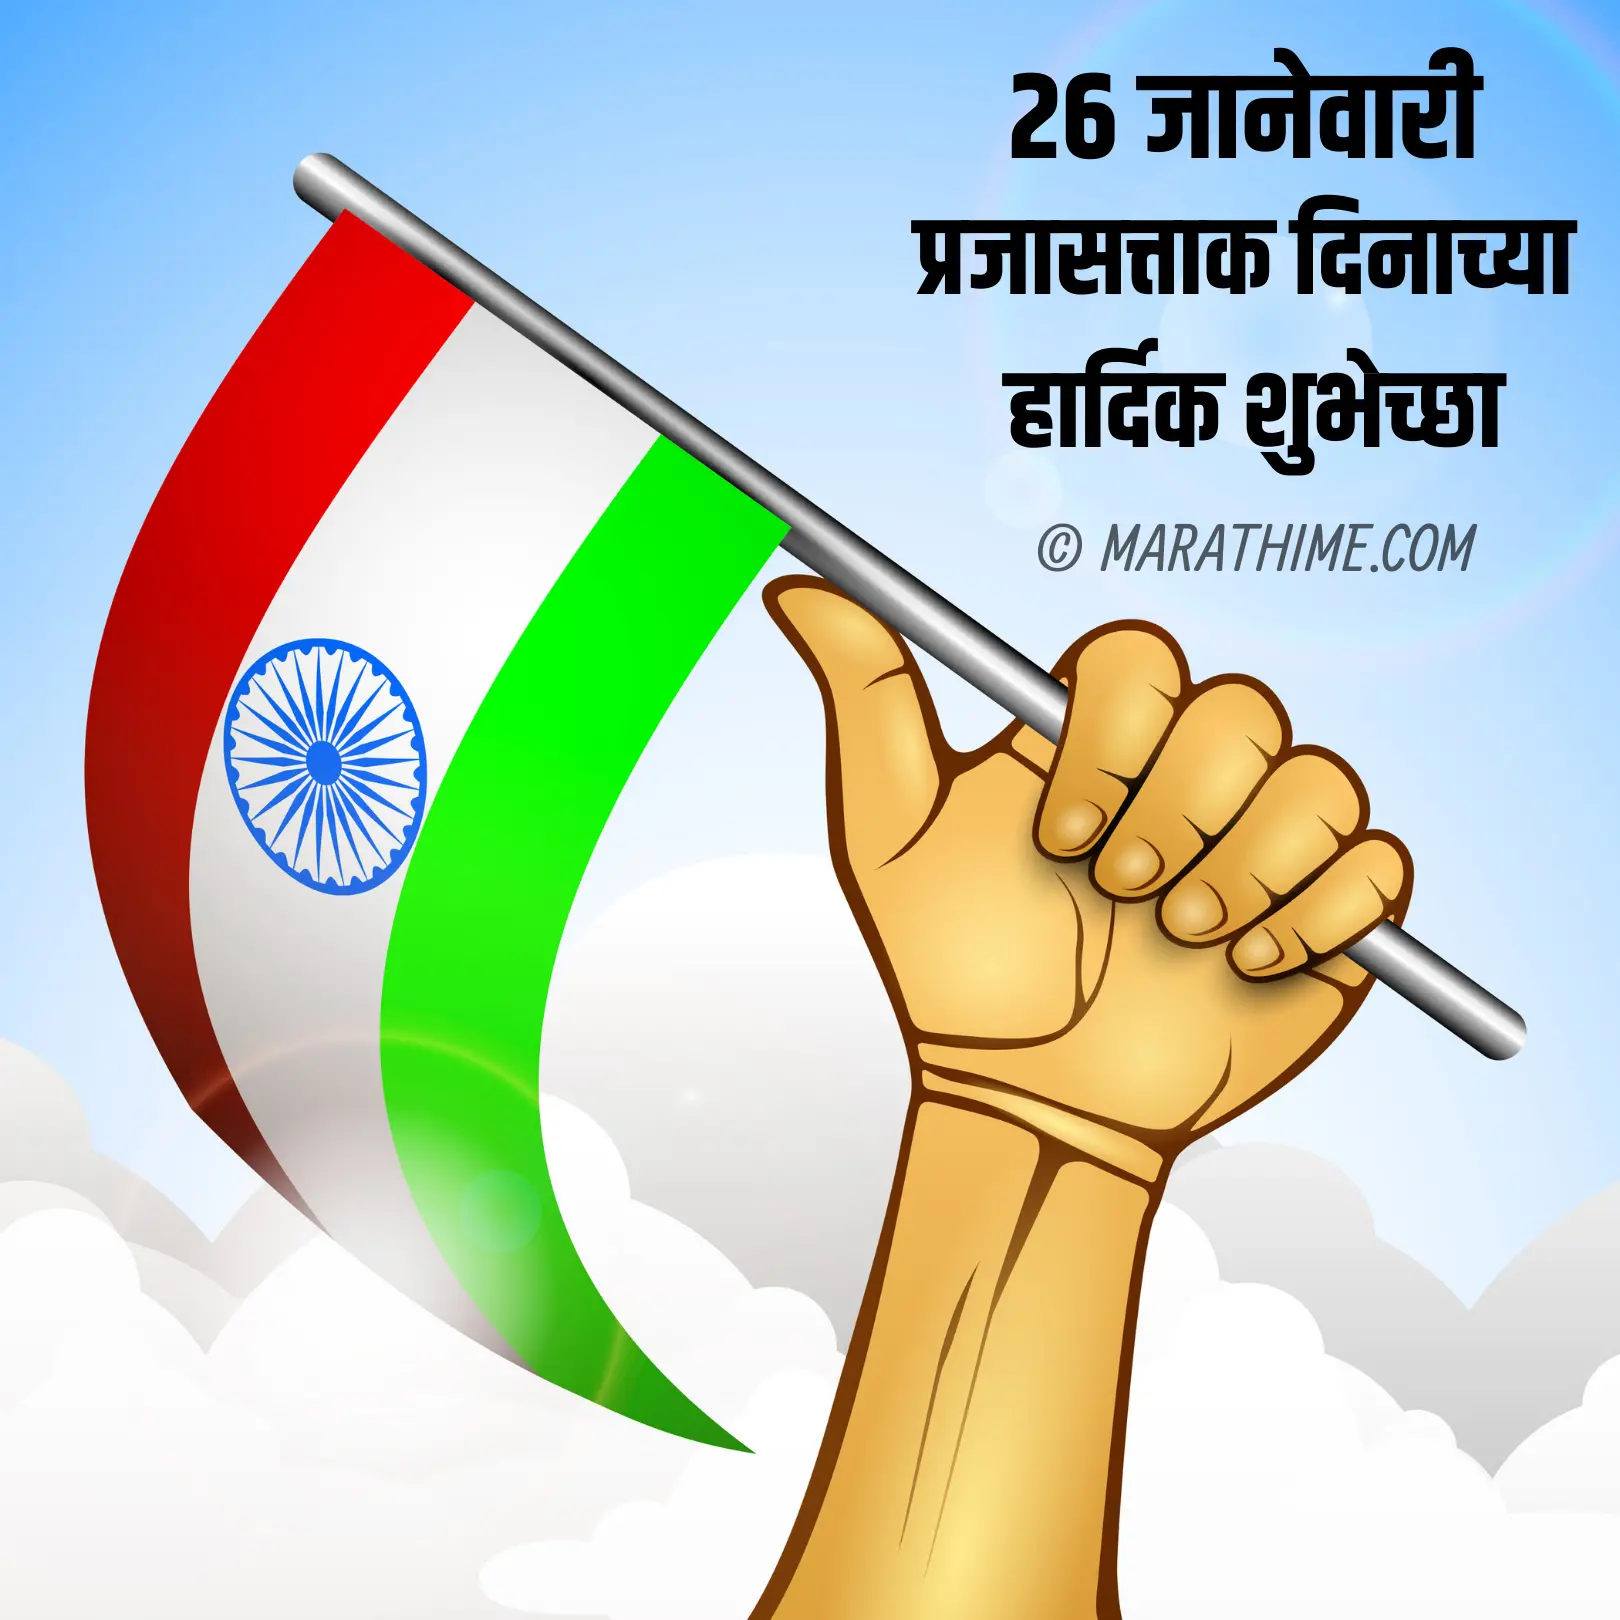 प्रजासत्ताक दिन शुभेच्छा-republic day quotes in marathi (16)